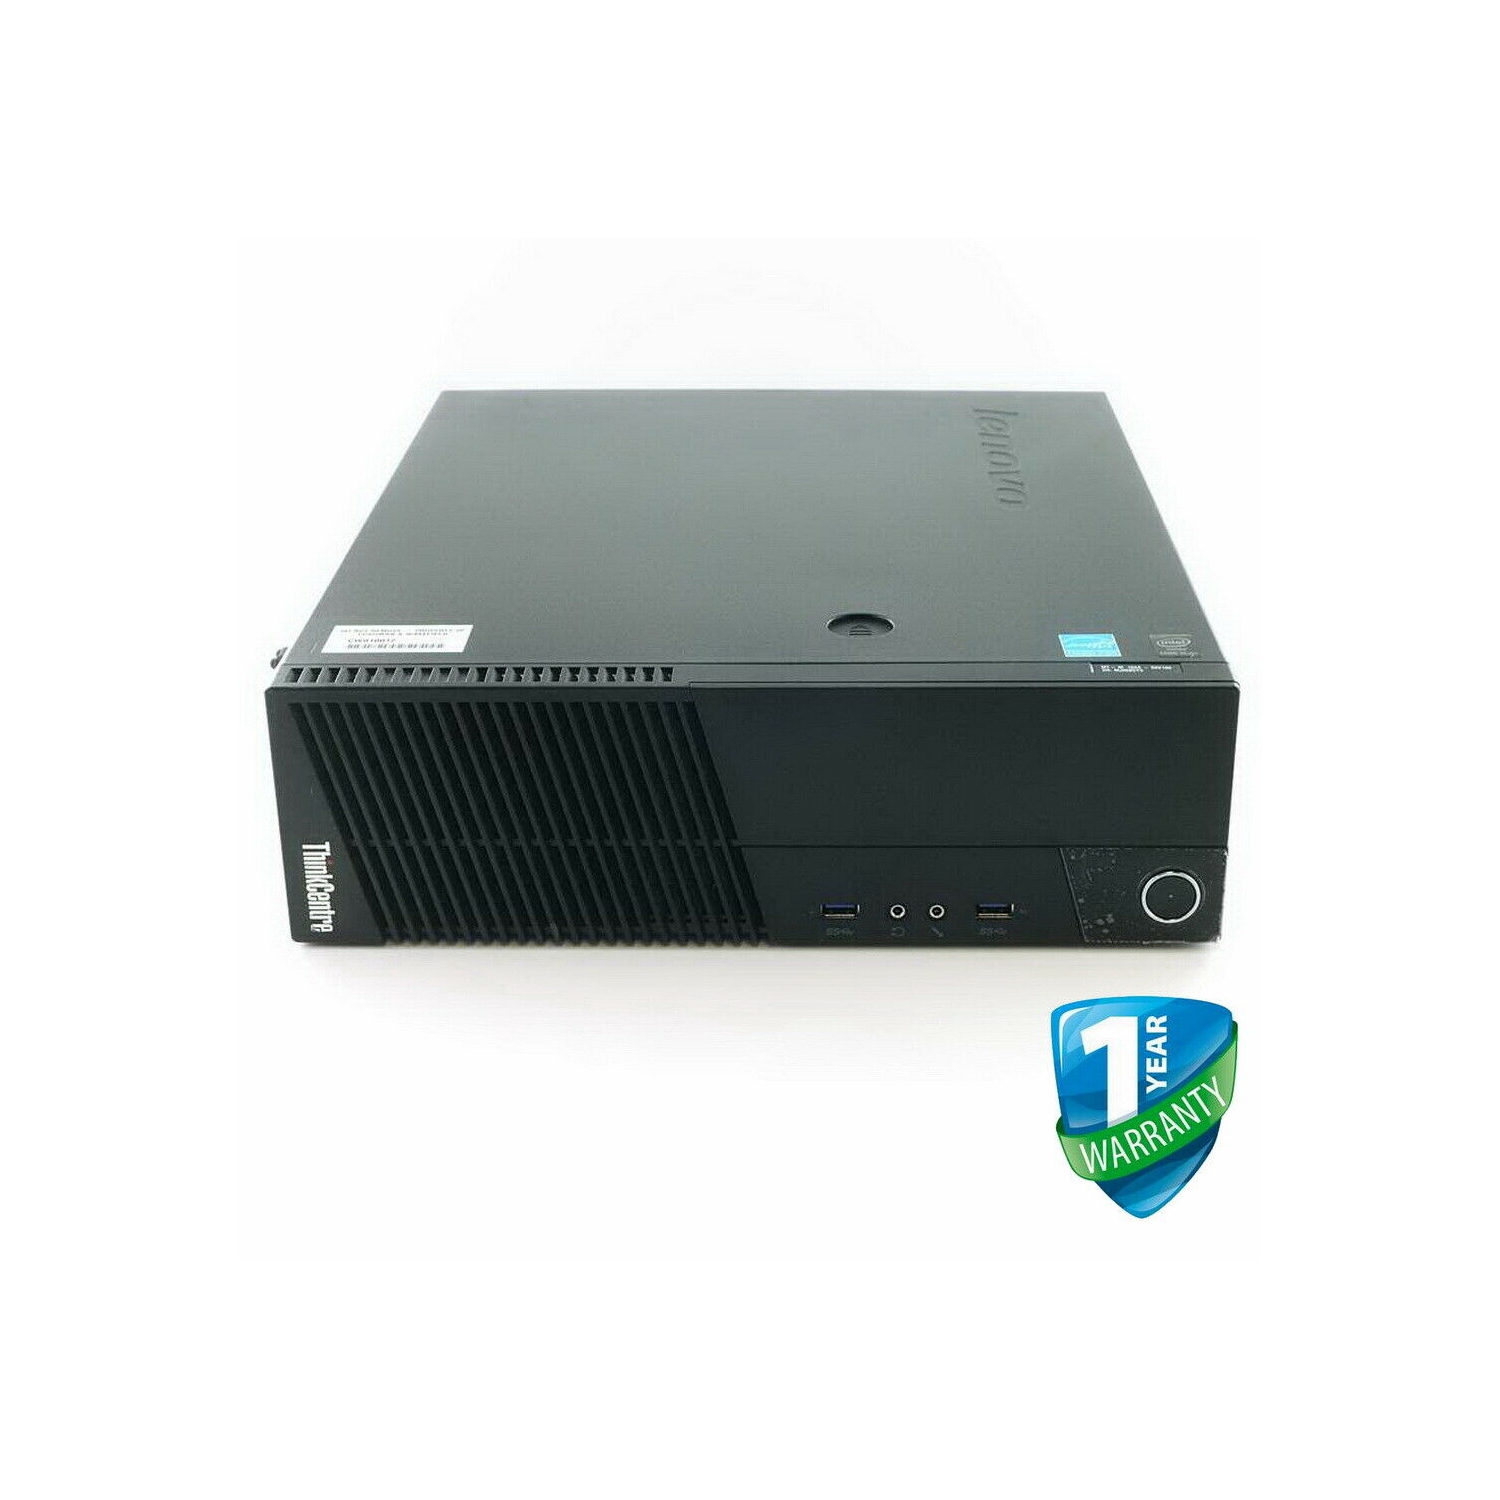 Refurbished (Good) - Gaming PC - Lenovo ThinkCentre M93 SFF Desktop Computer with NEW NVIDIA GT1030 2GB | Intel Core i5-4670 16GB DDR3 RAM | 256G SSD | Windows 10 Pro